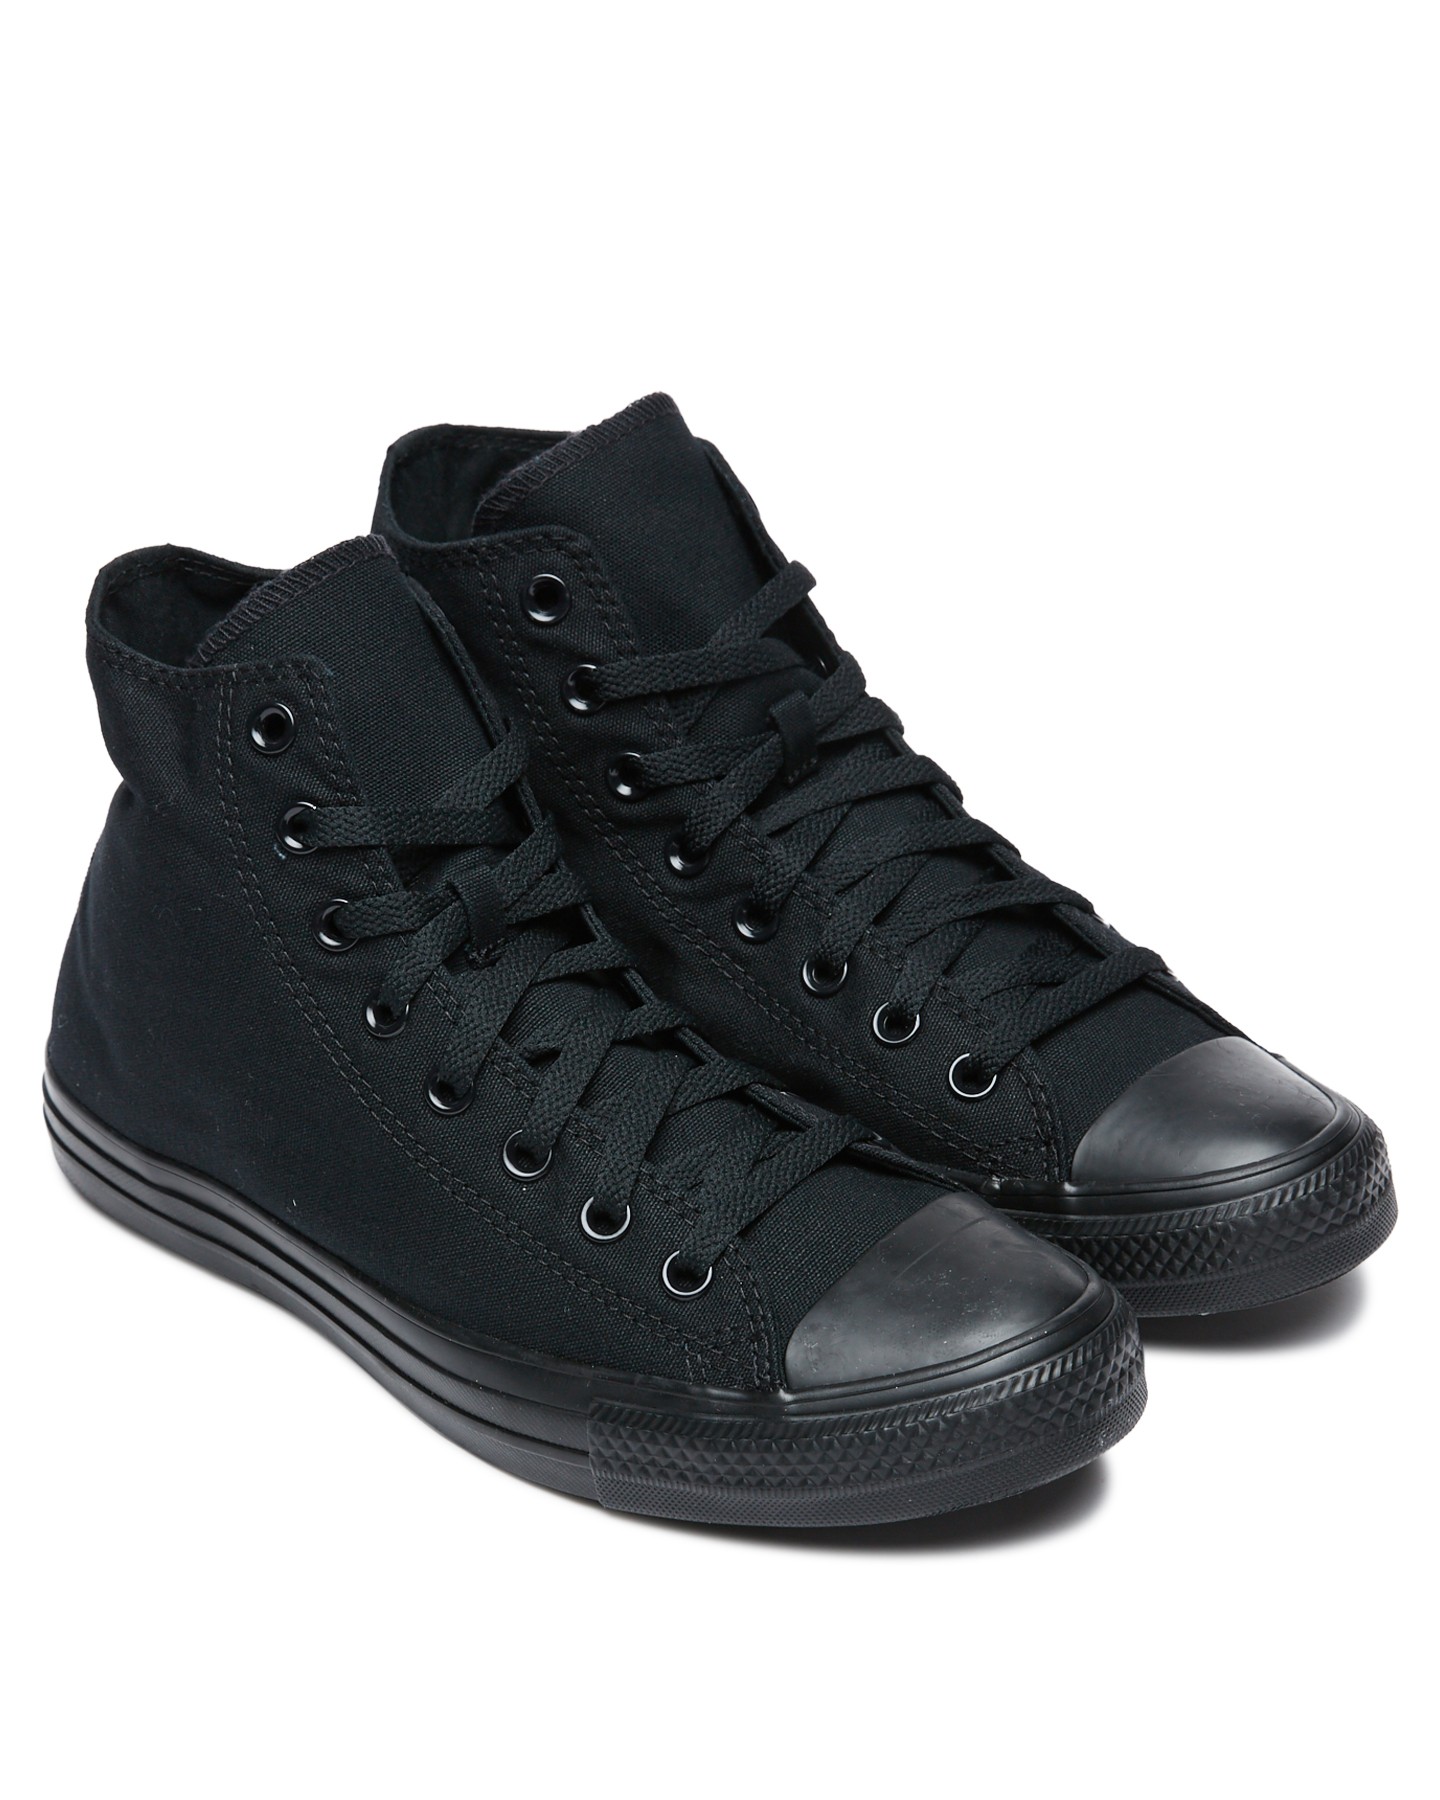 Converse Womens Chuck Taylor All Star Hi Top Shoe - Black Monochrome ...